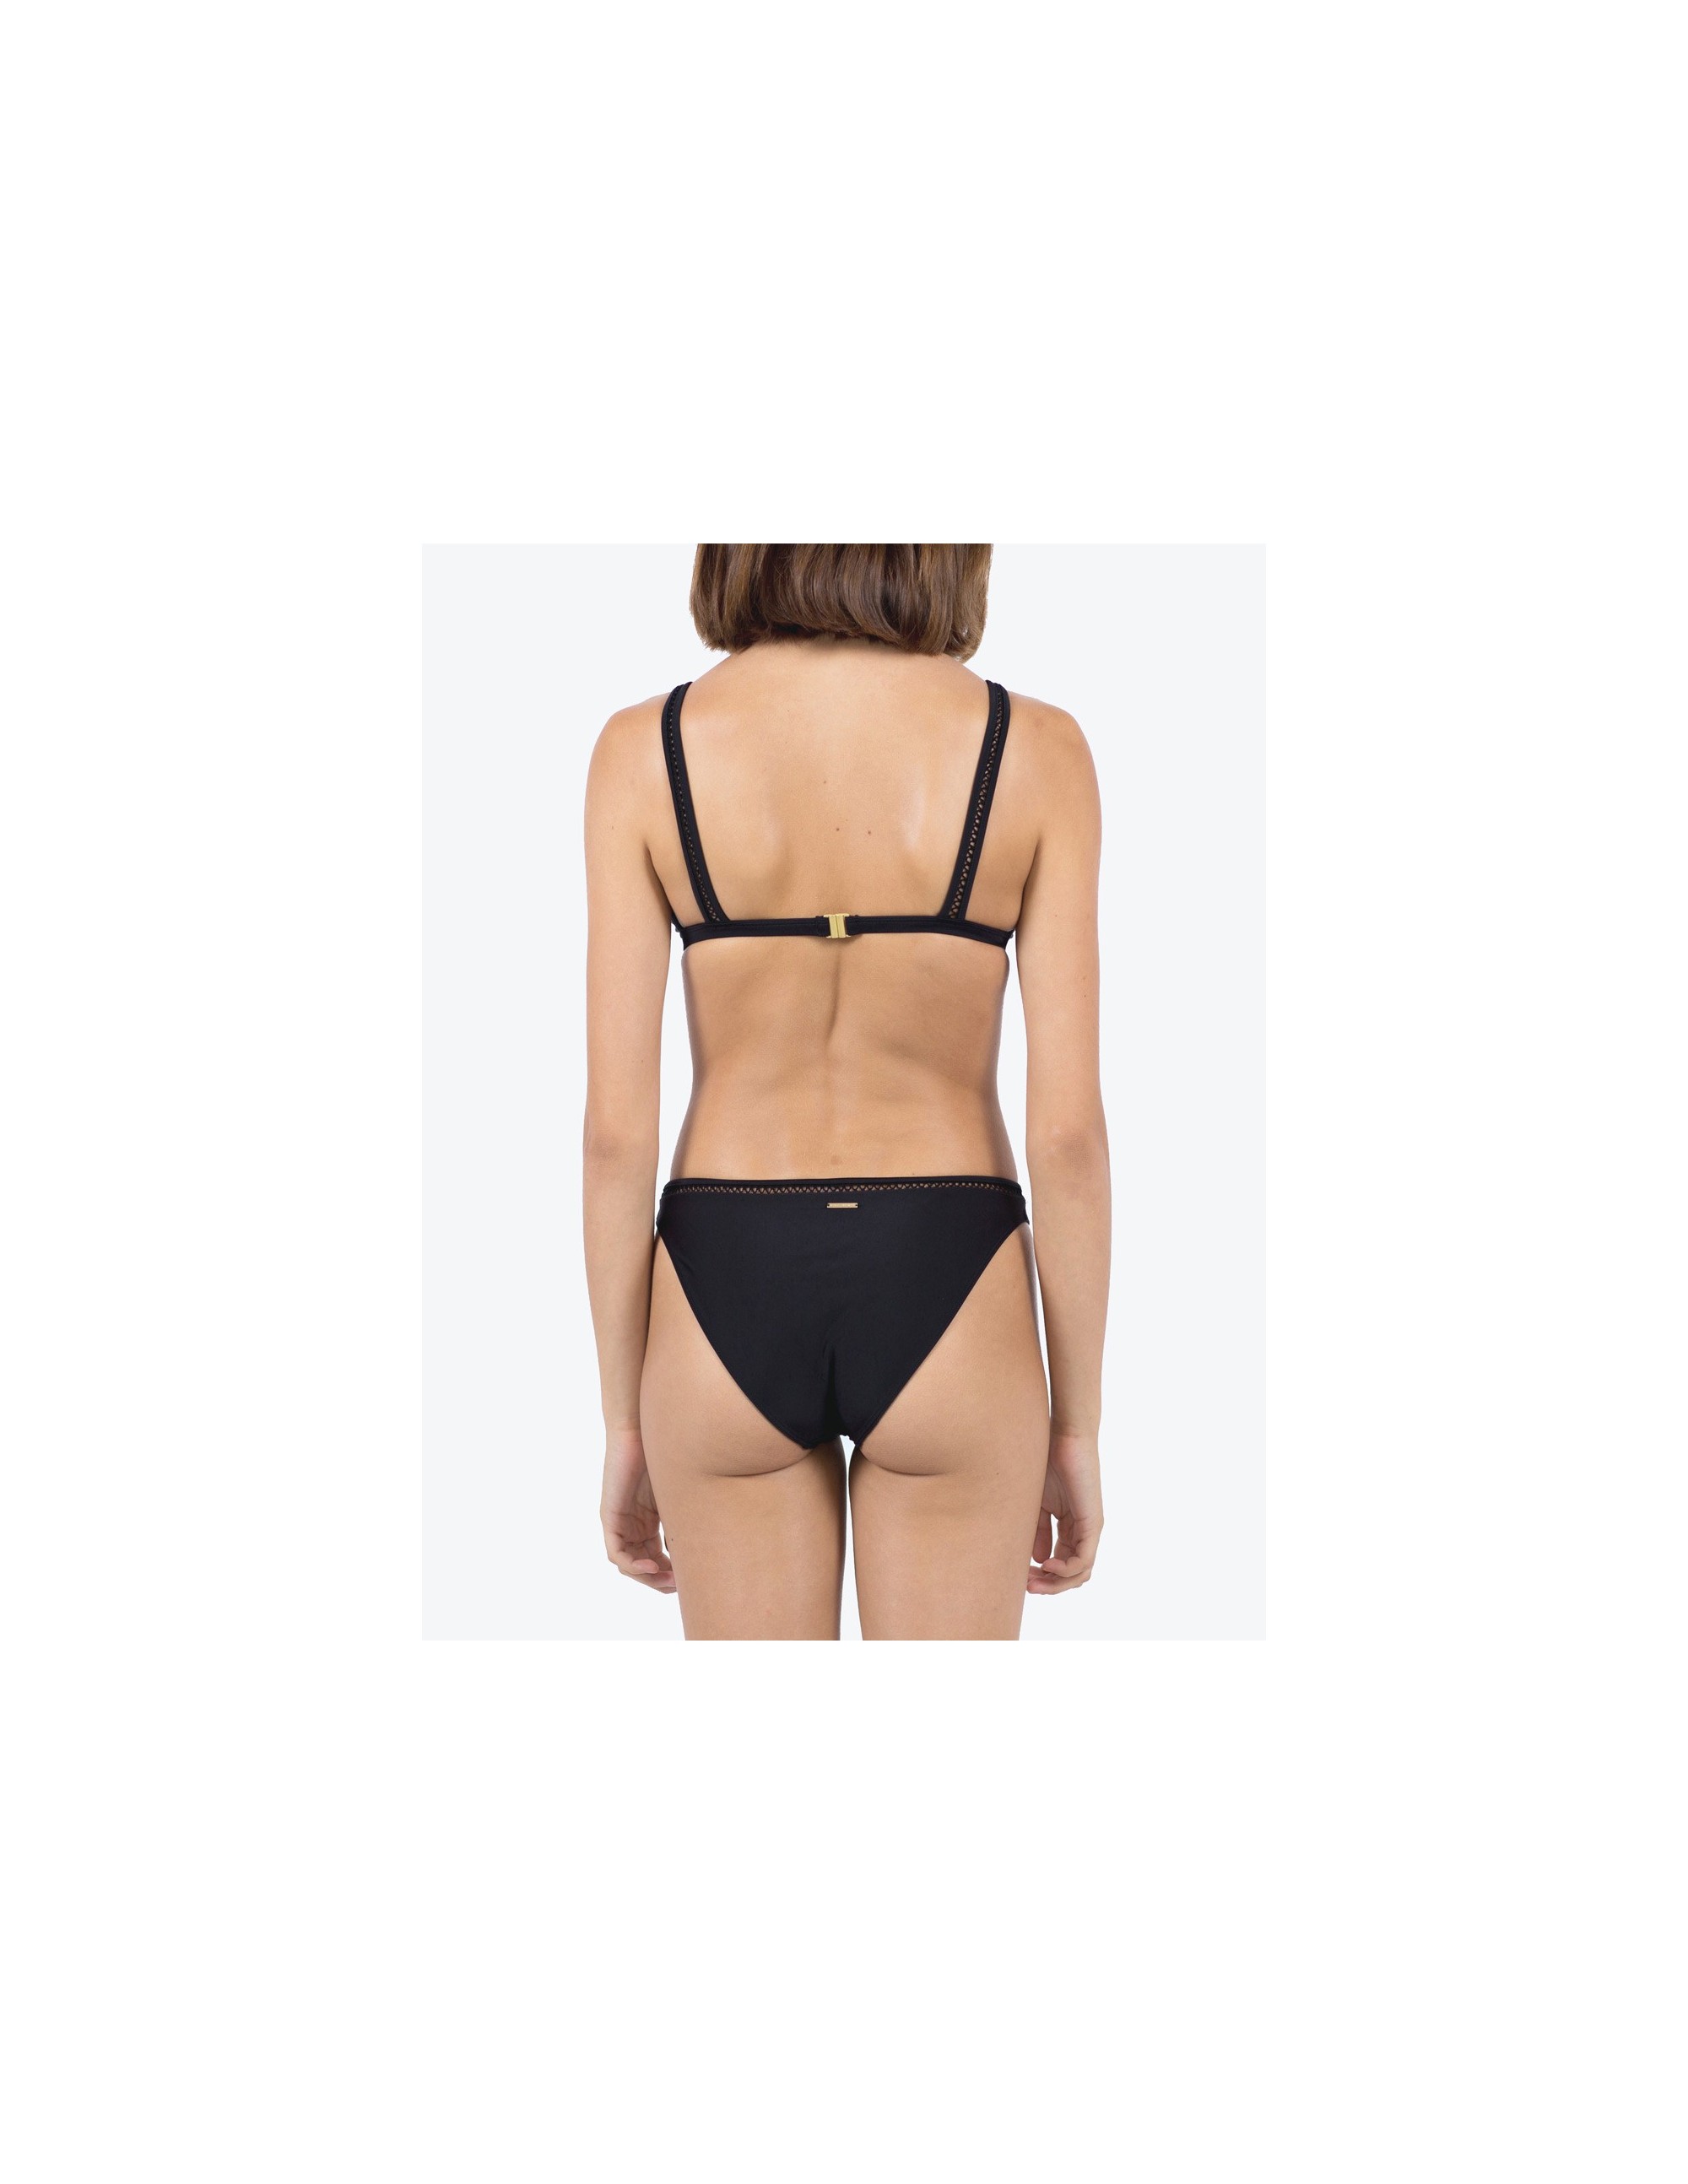 BELLA bikini bottom - MATTE BLACK